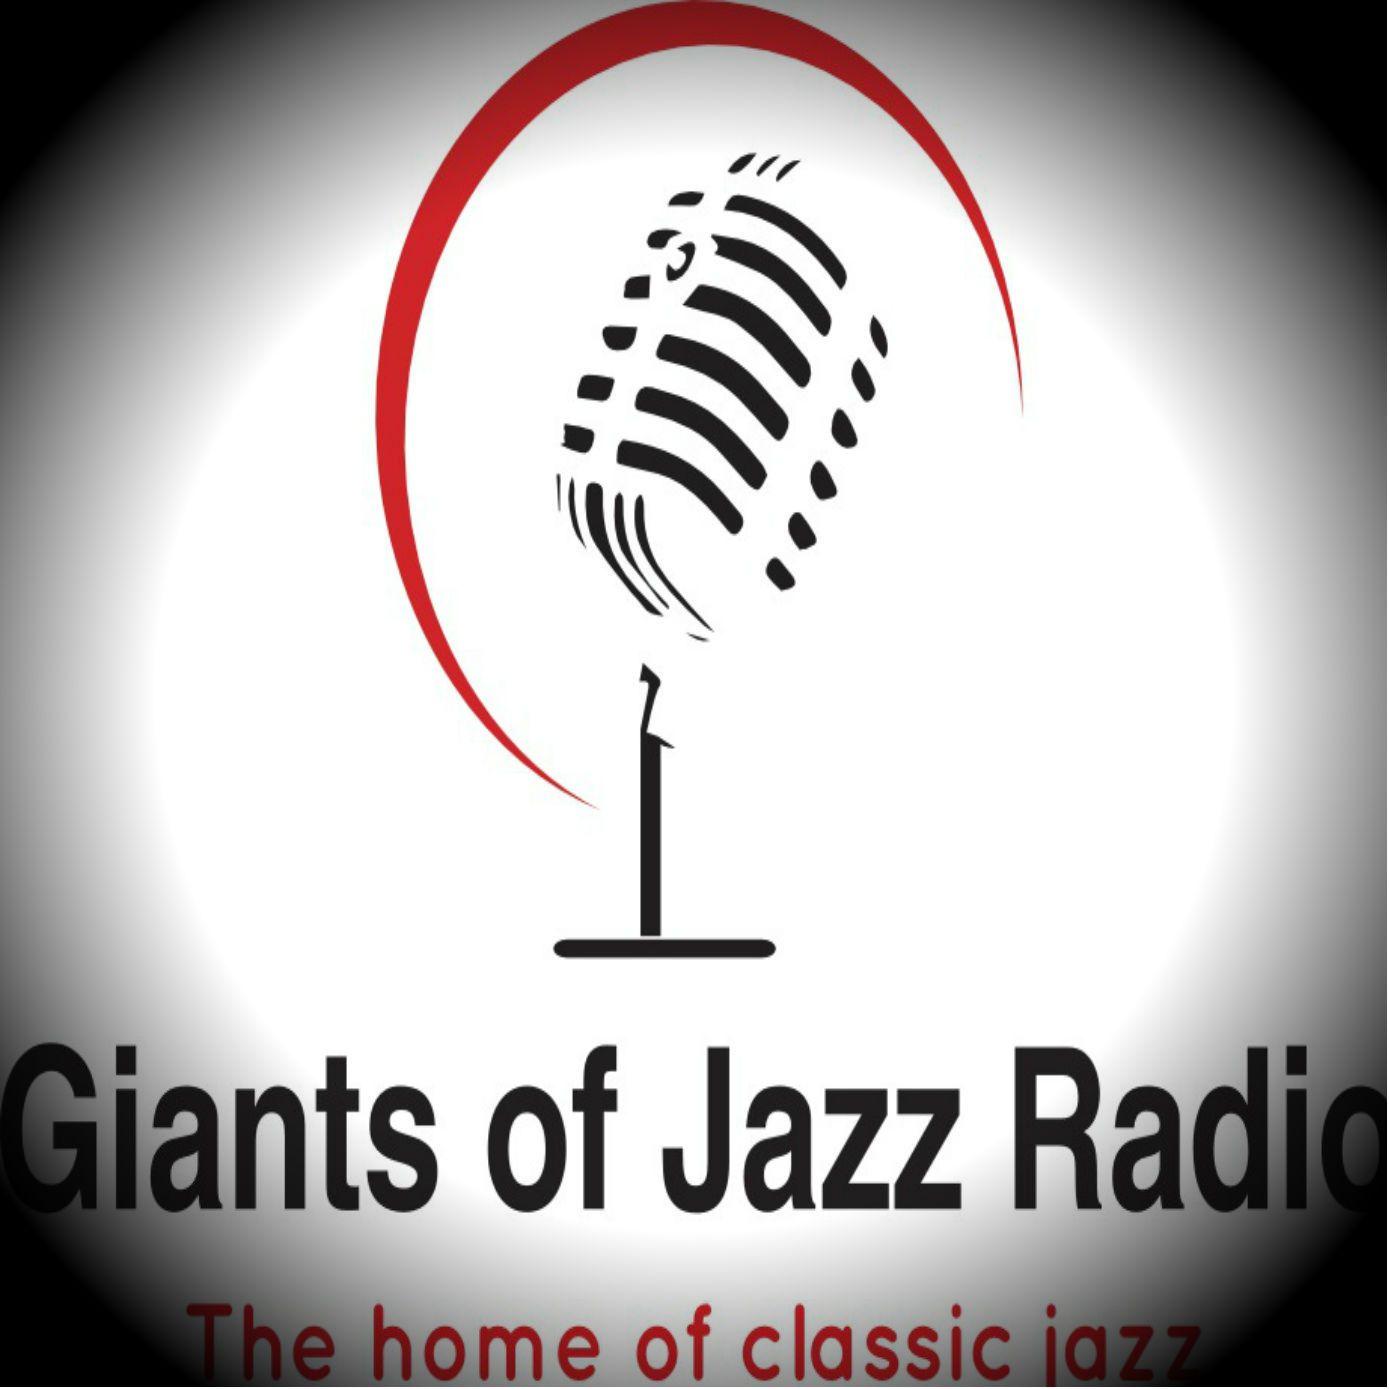 Jazz Radio Logo - Giants of Jazz Radio